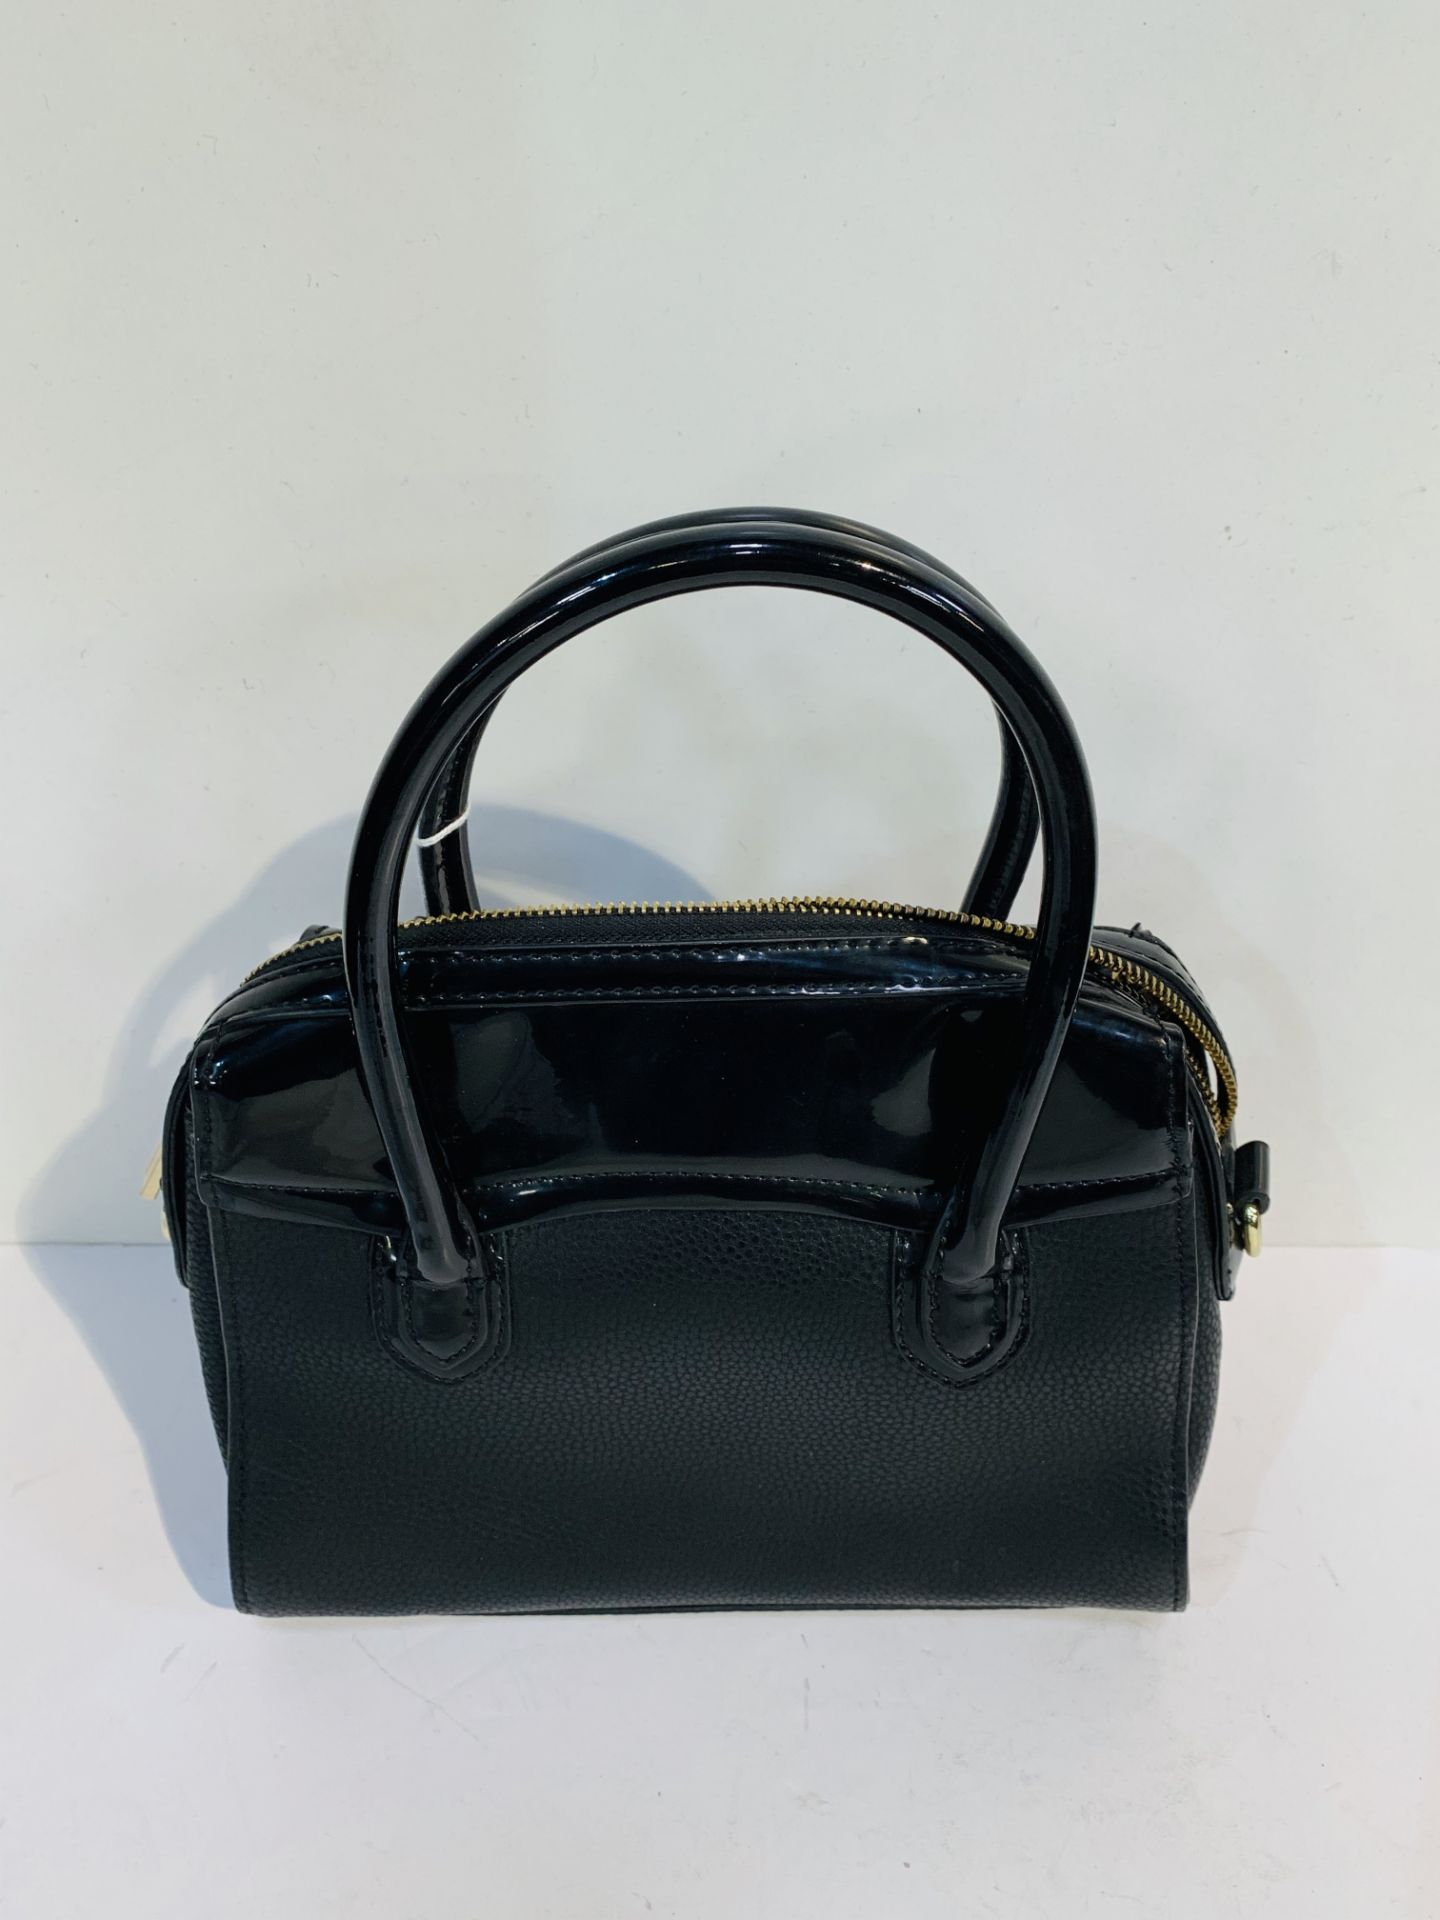 Jasper Conran faux snakeskin/black patent Handbag. Gilt fittings & printed lining - Image 2 of 2